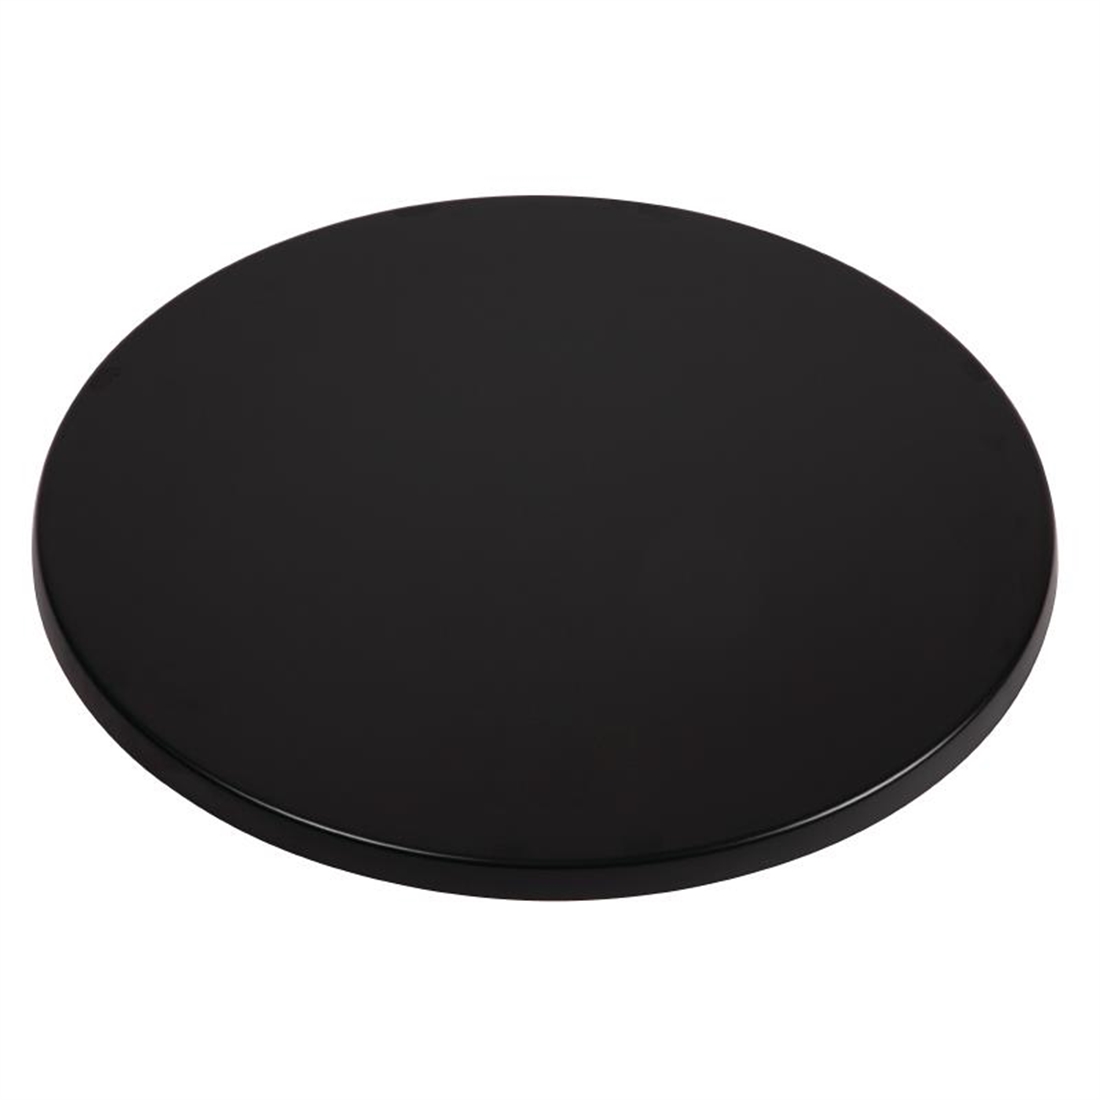 Werzalit Pre-drilled Round Table Top Black 600mm